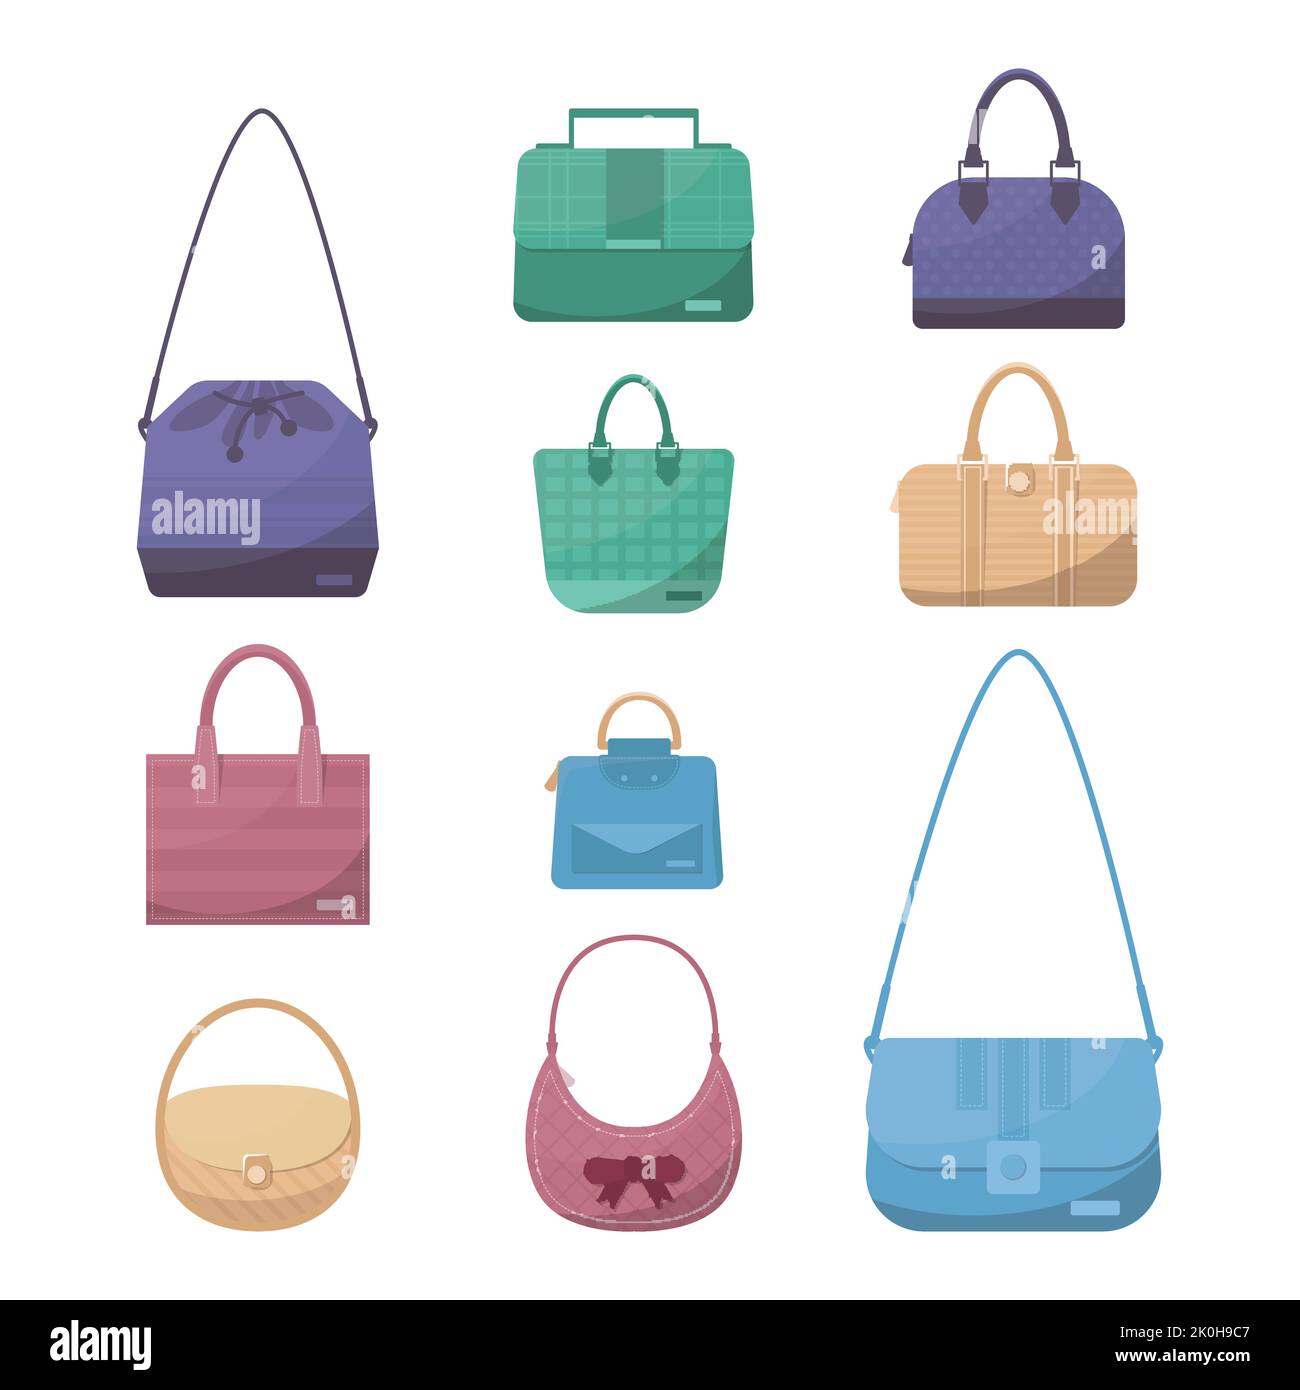 Girl Woman Fashion Bag Icon Design Illustration Isolated Stock Vector